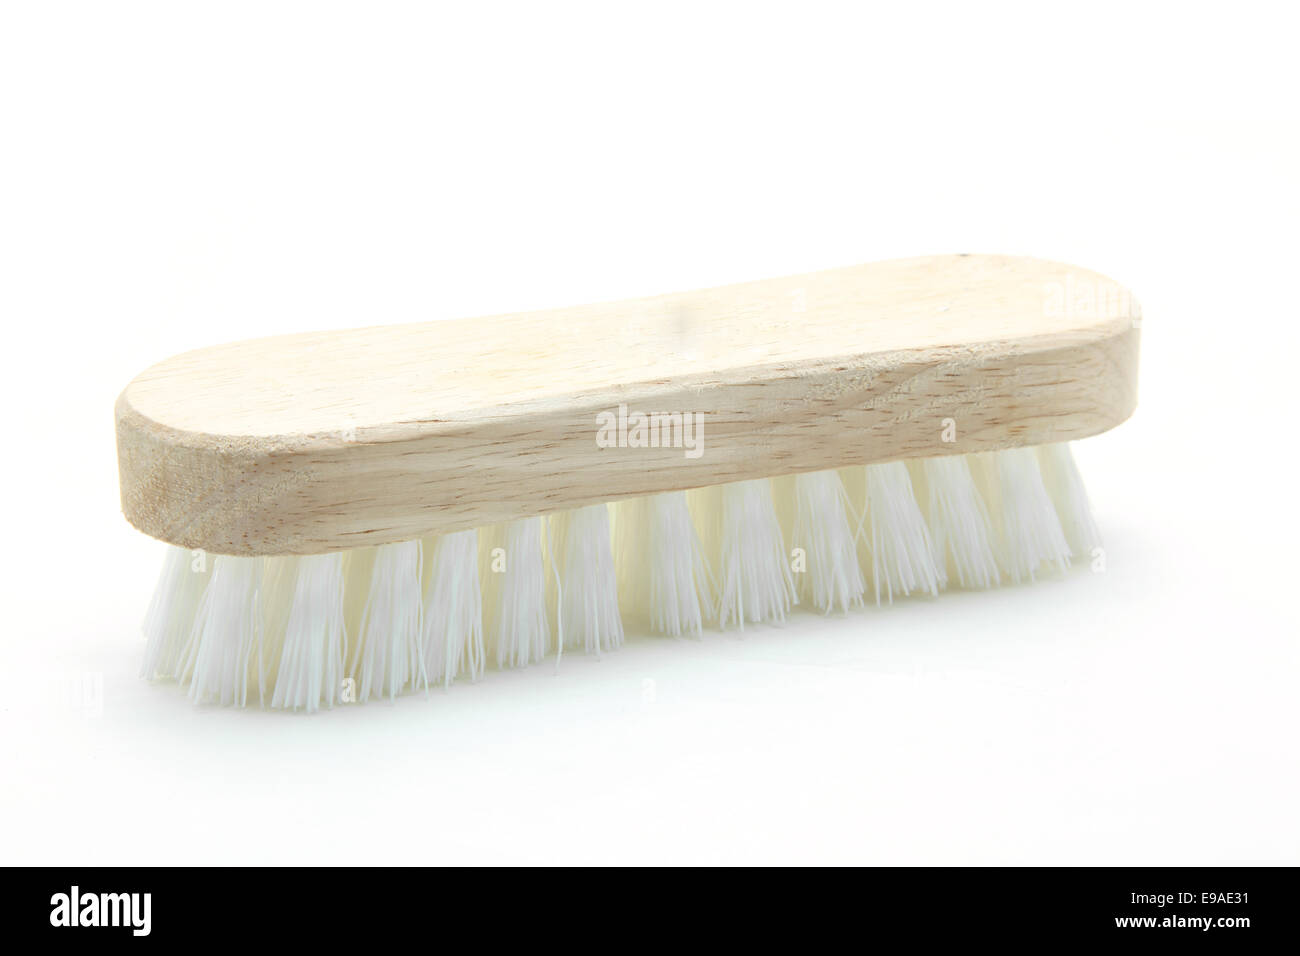 wooden cleaning scrub brush Stock Photo